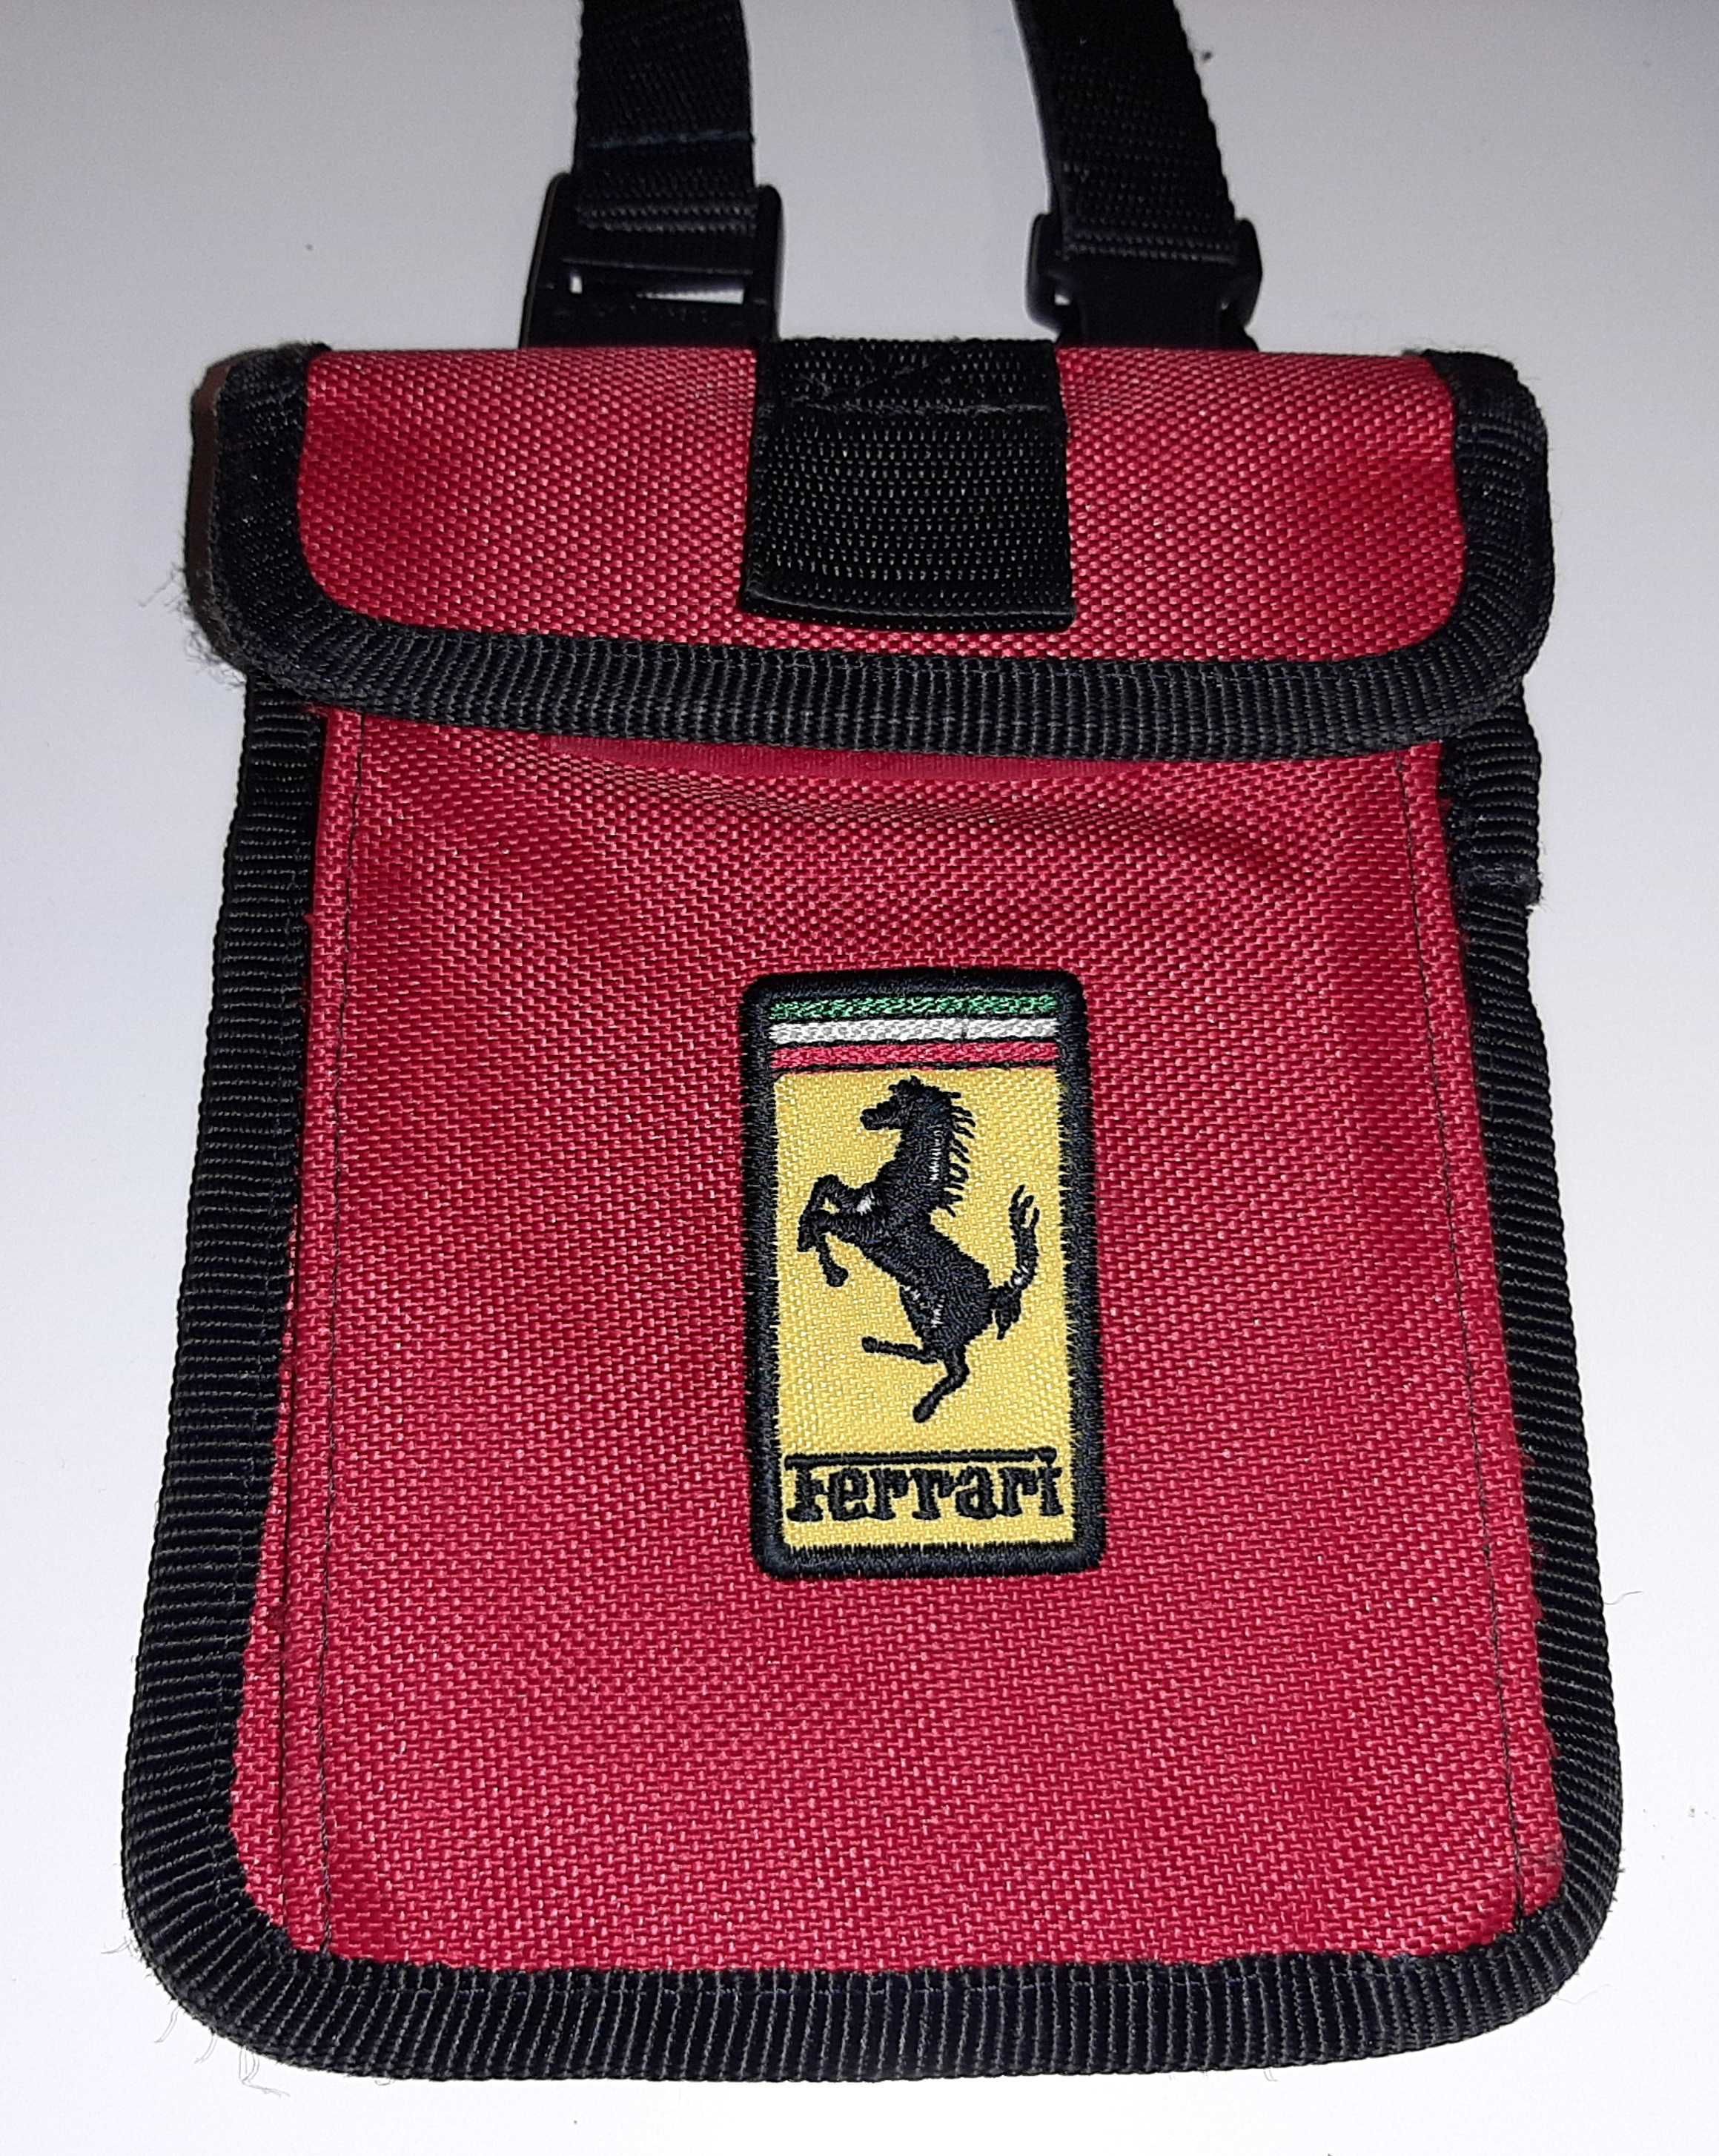 Bolsa Ferrari produto original